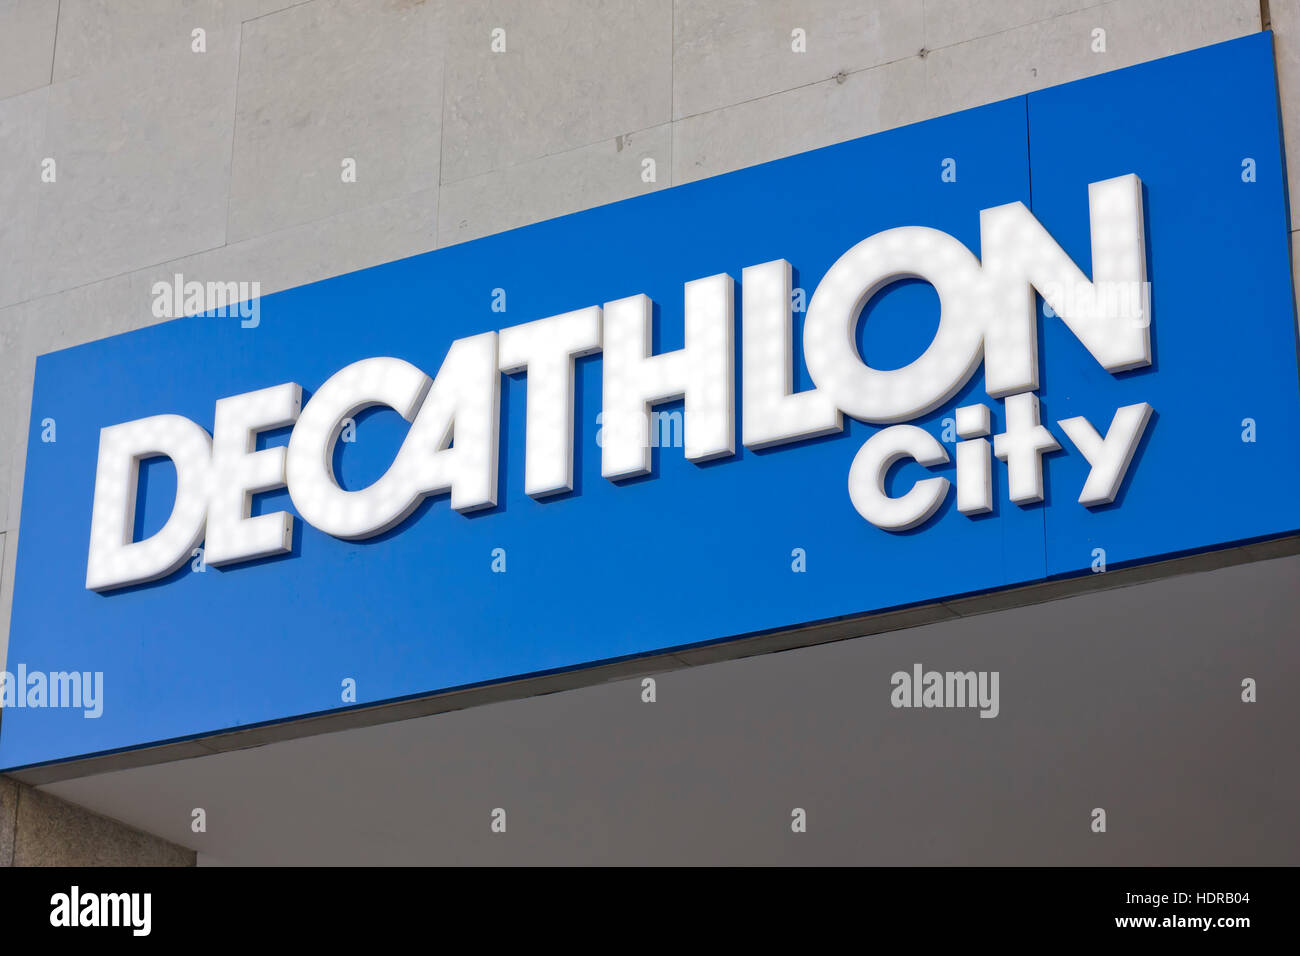 Decathlon company logo neon sign outdoor in Madrid (Spain). Stock Photo